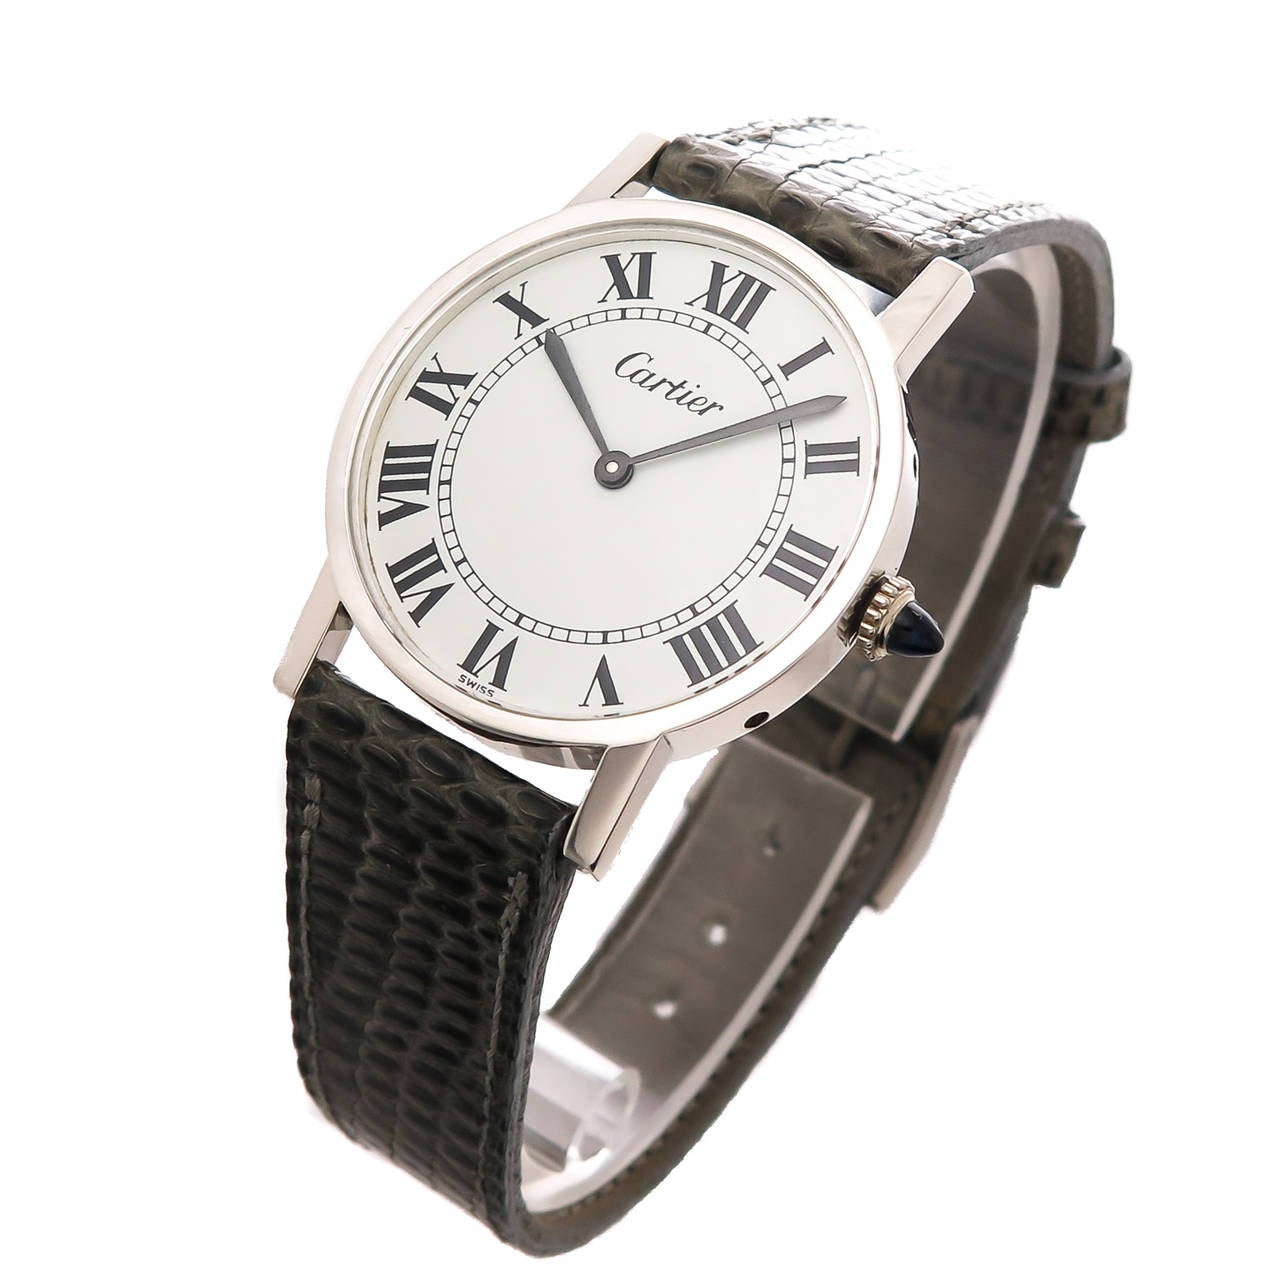 Circa 1970s Cartier wristwatch in a 31 M.M. Calatrava style case. Manual wind 17 Jewel Cartier movement, white dial, black Roman numerals, sapphire crown. Gray lizard strap with silver Cartier buckle.